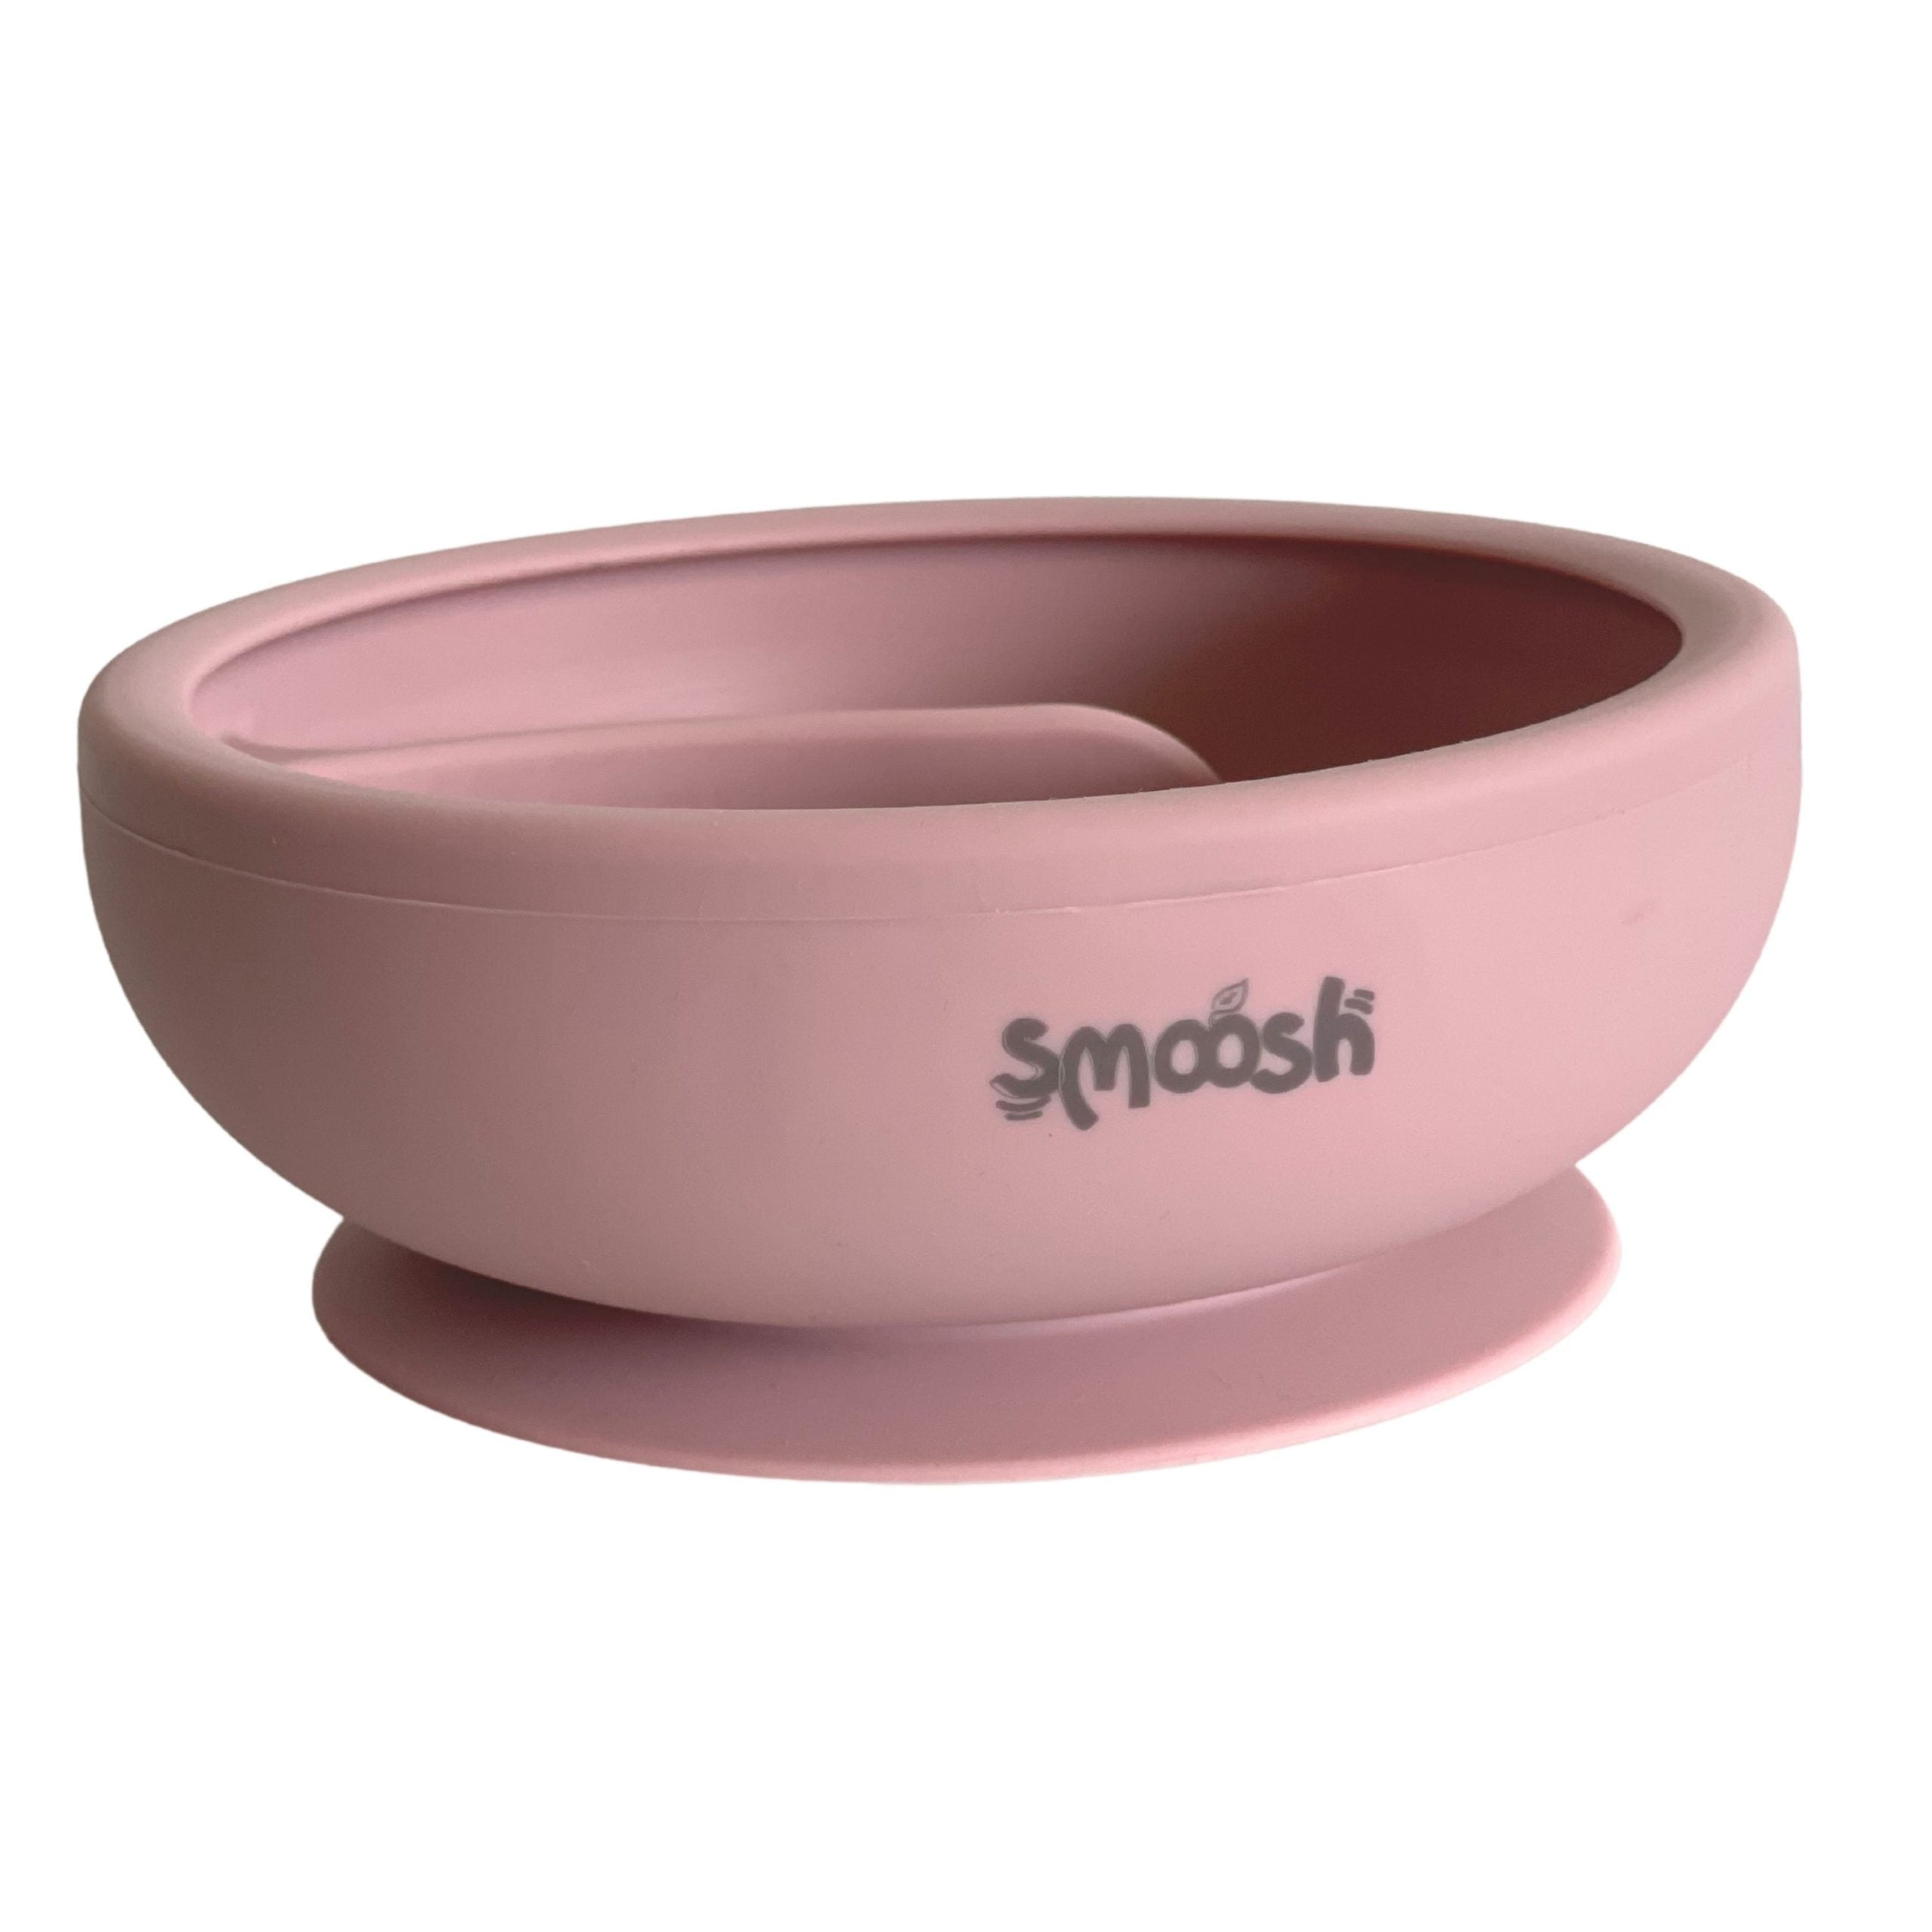 Smoosh Divider Bowl Pink